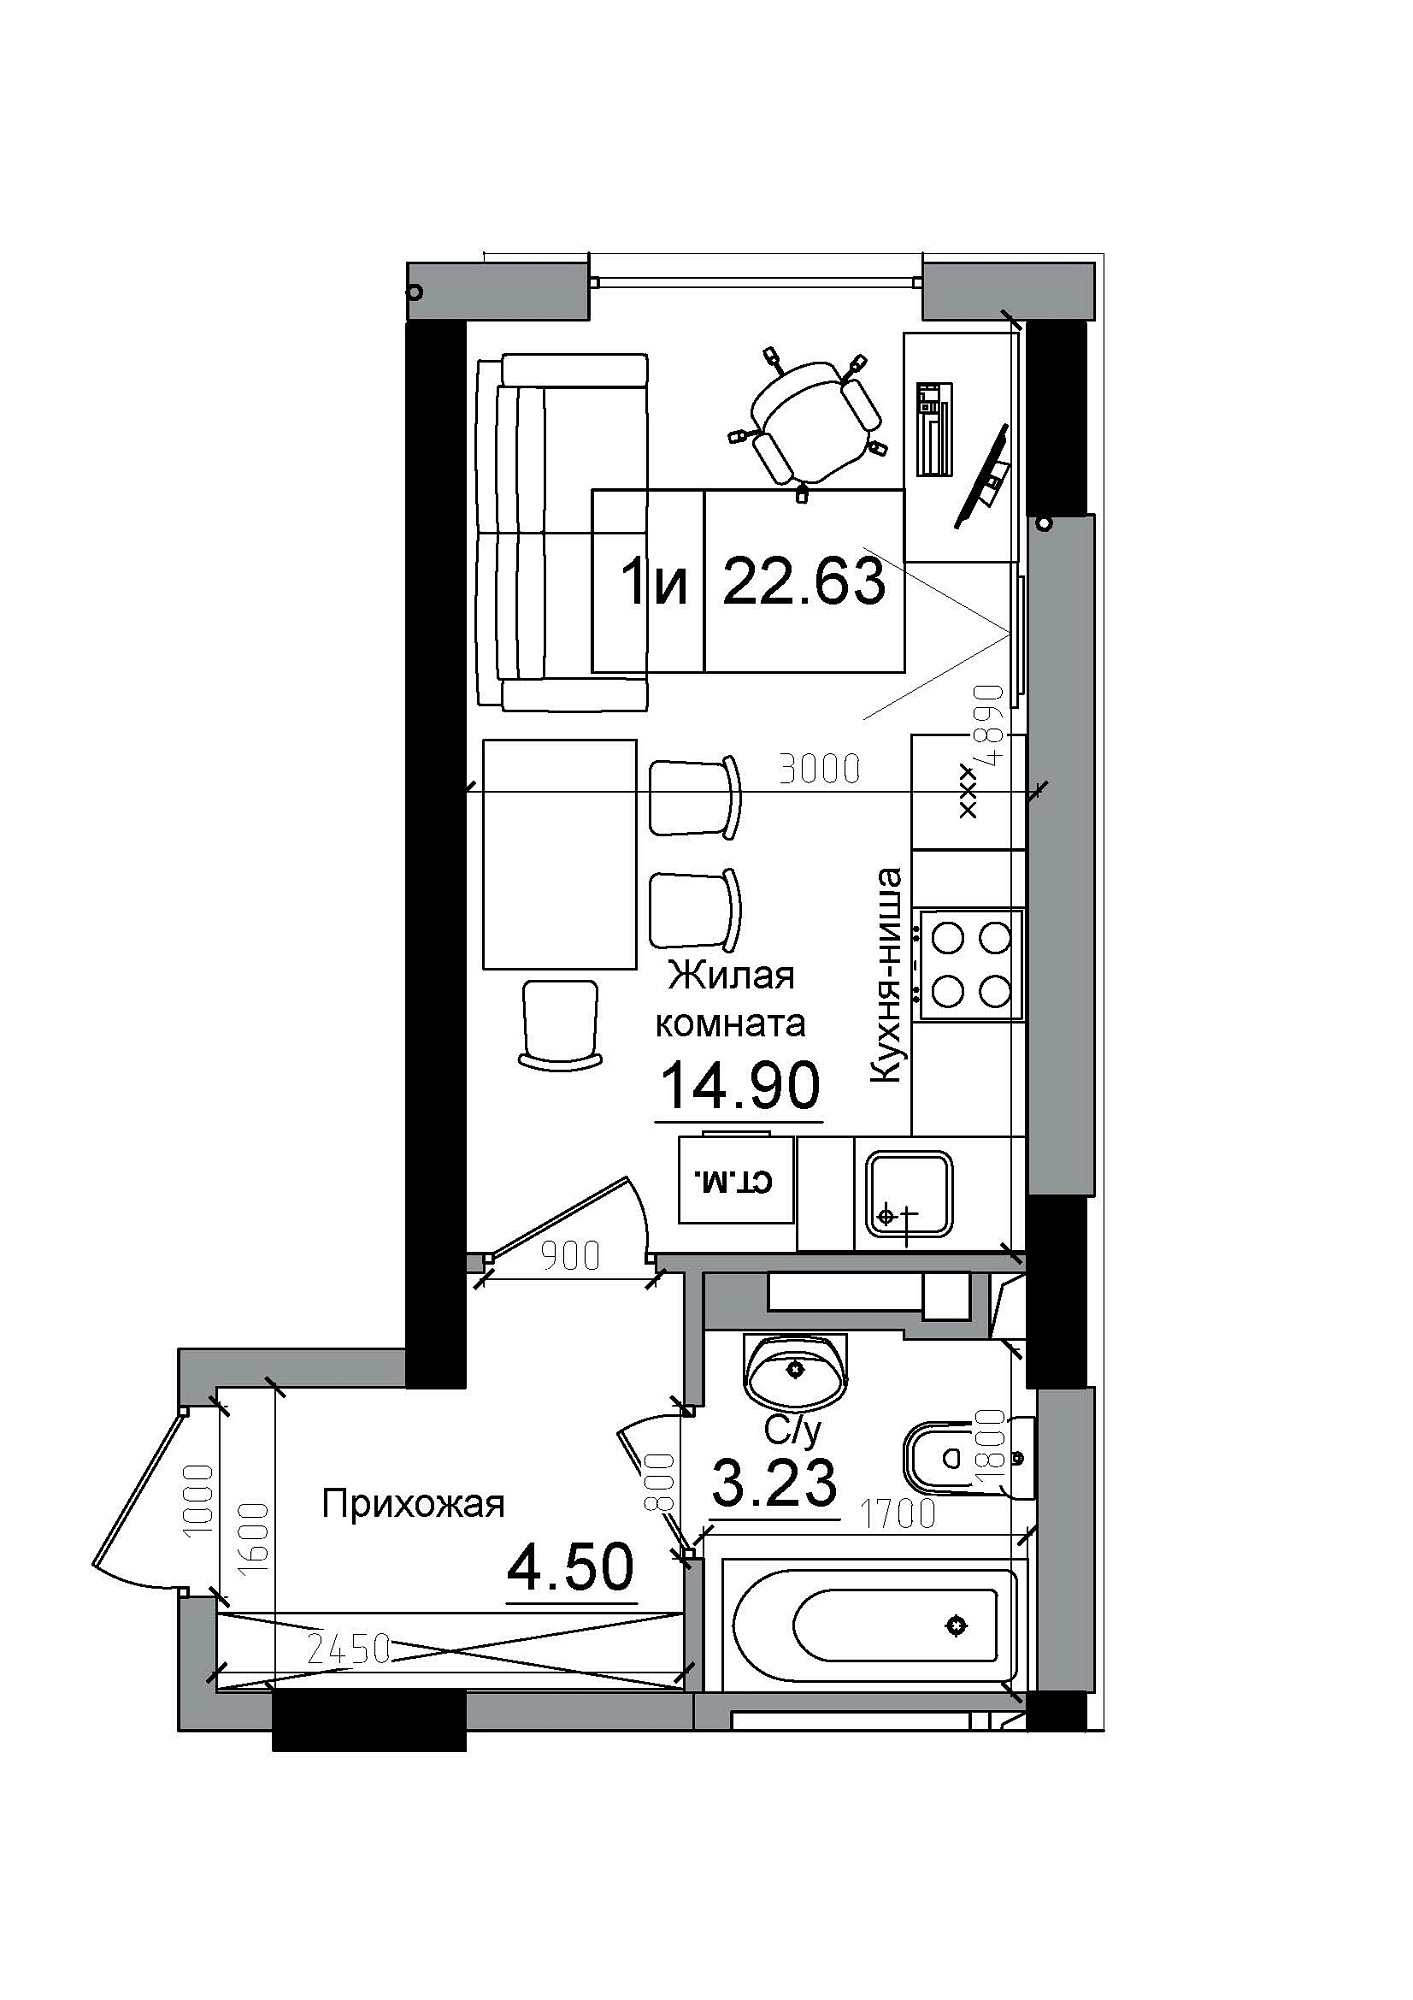 Planning Smart flats area 22.63m2, AB-12-05/00011.